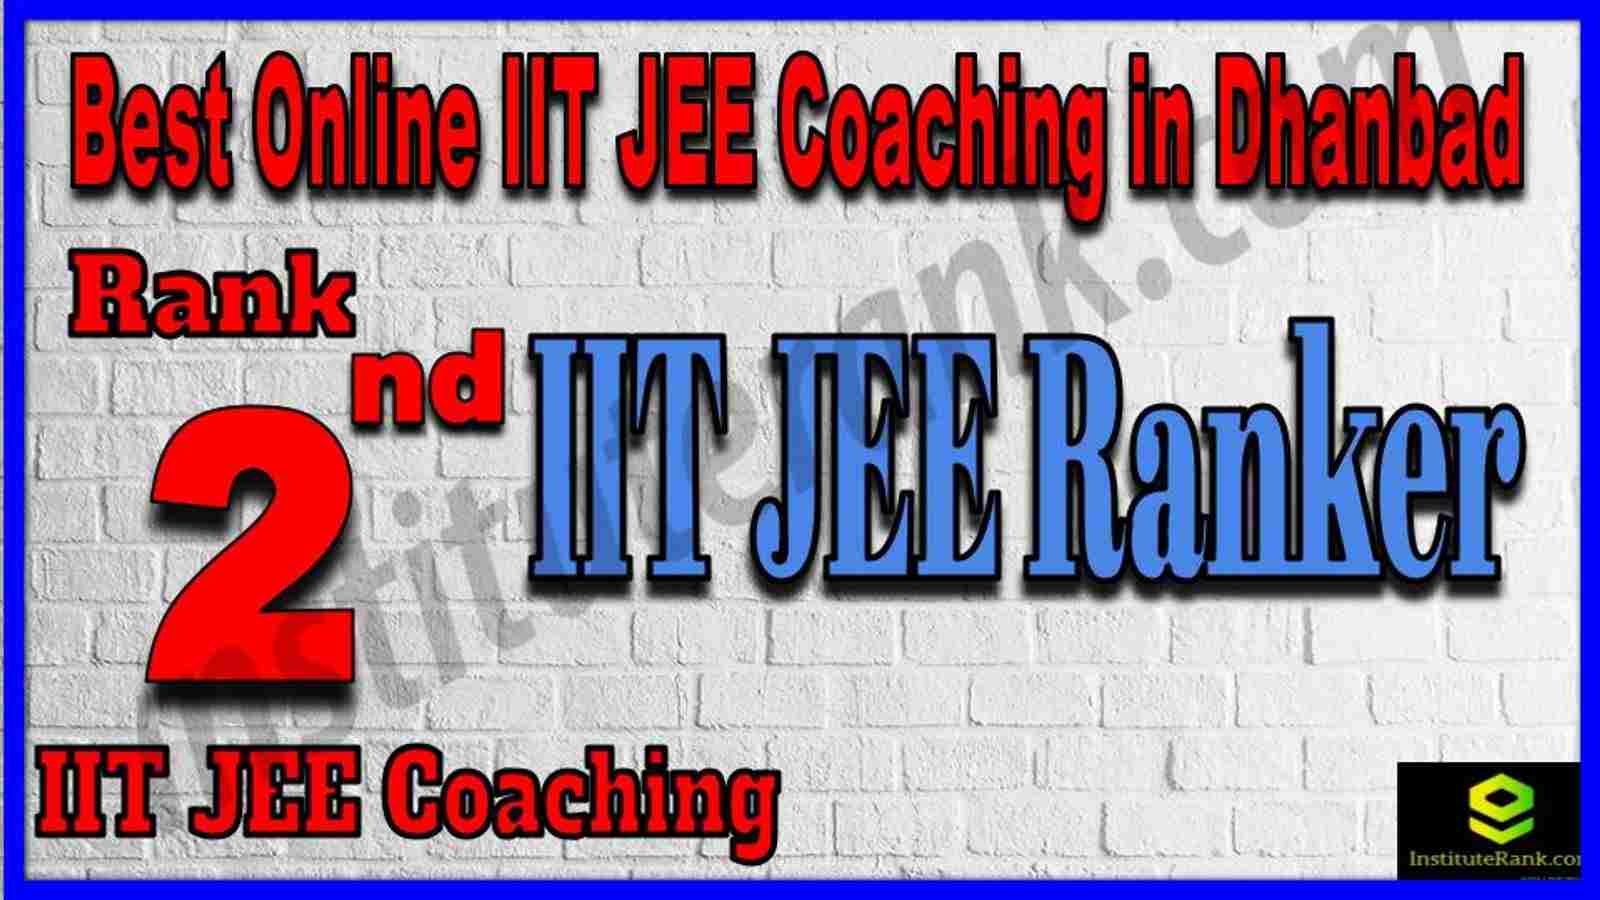 Rank 2nd Best Online IIT JEE Coaching in Dhanbad